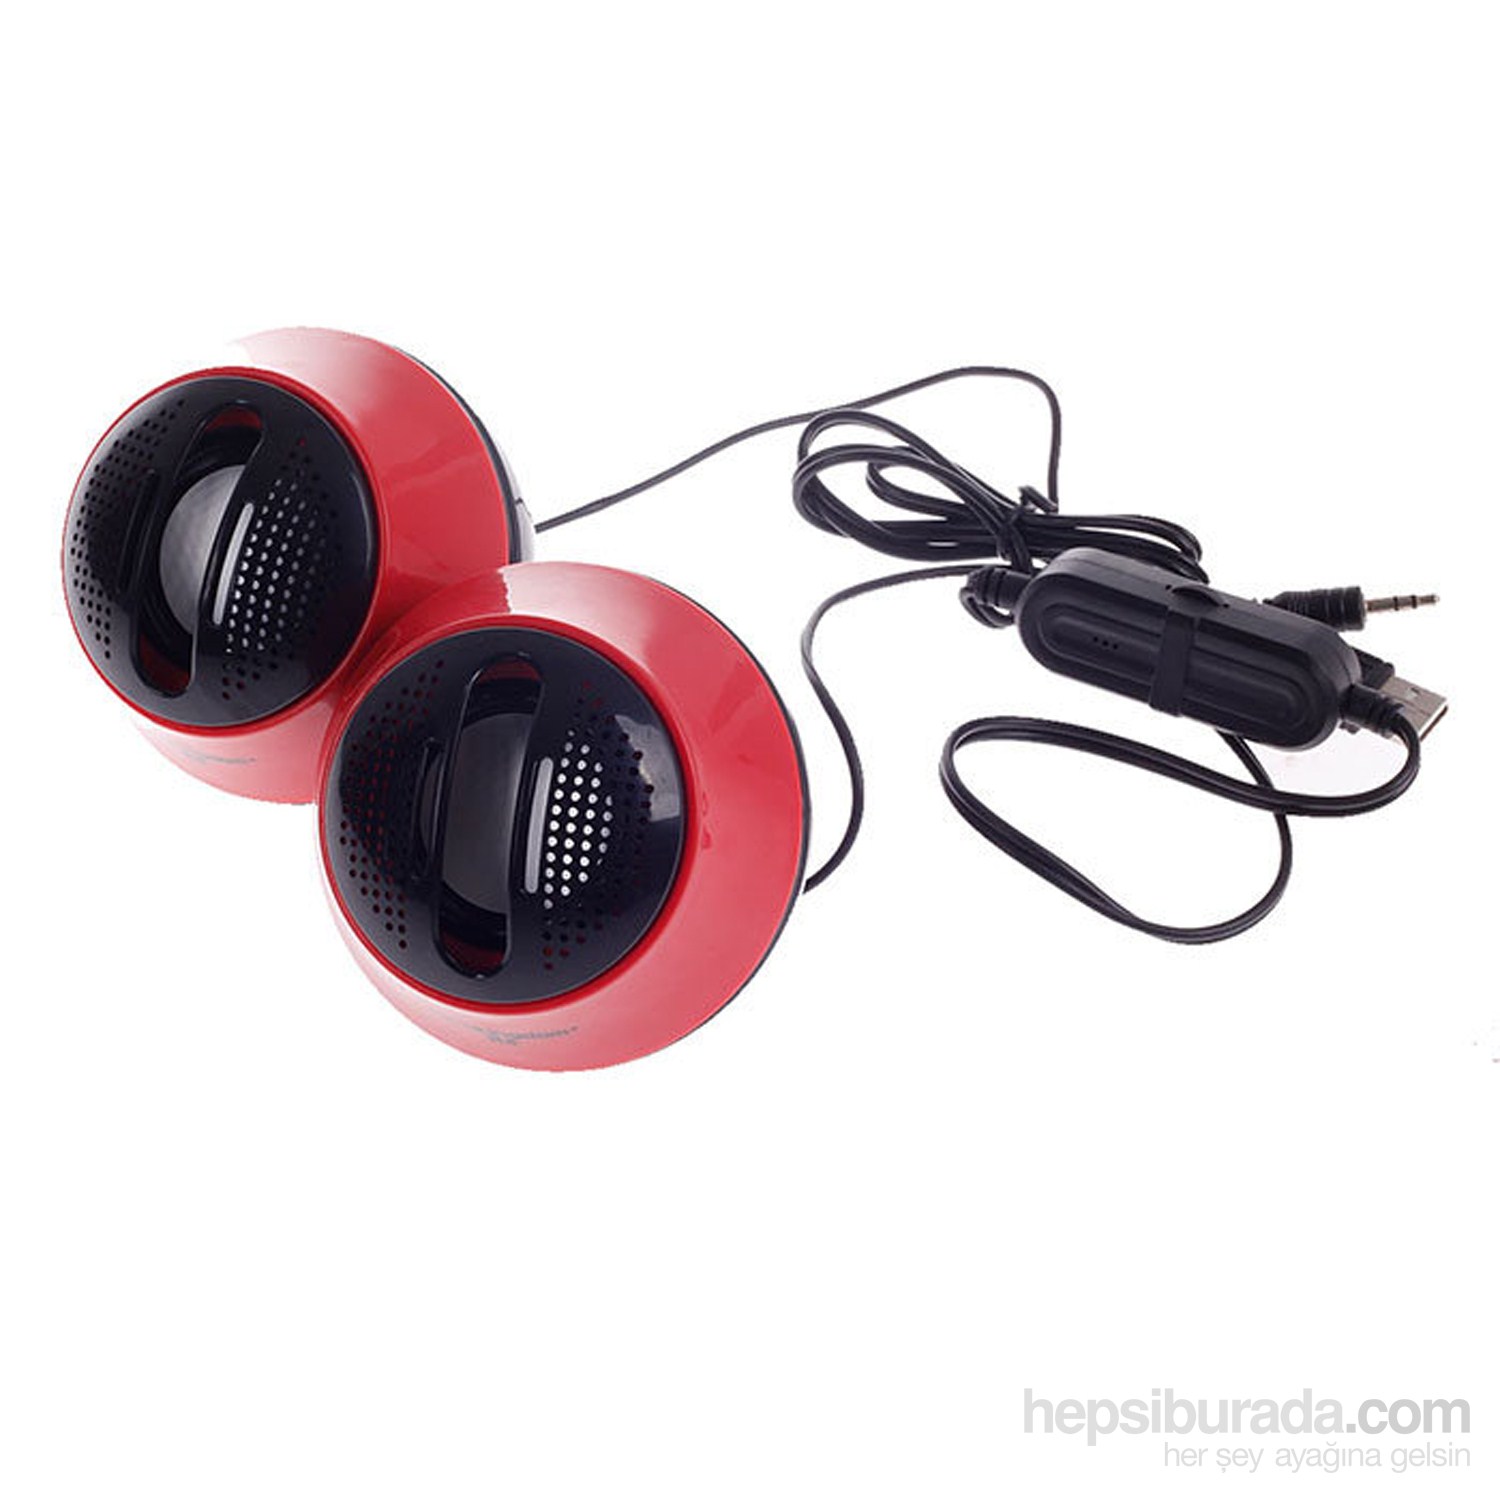 Bewell BS013 USB Mini Yüksek Sesli Hoparlör - Kırmızı